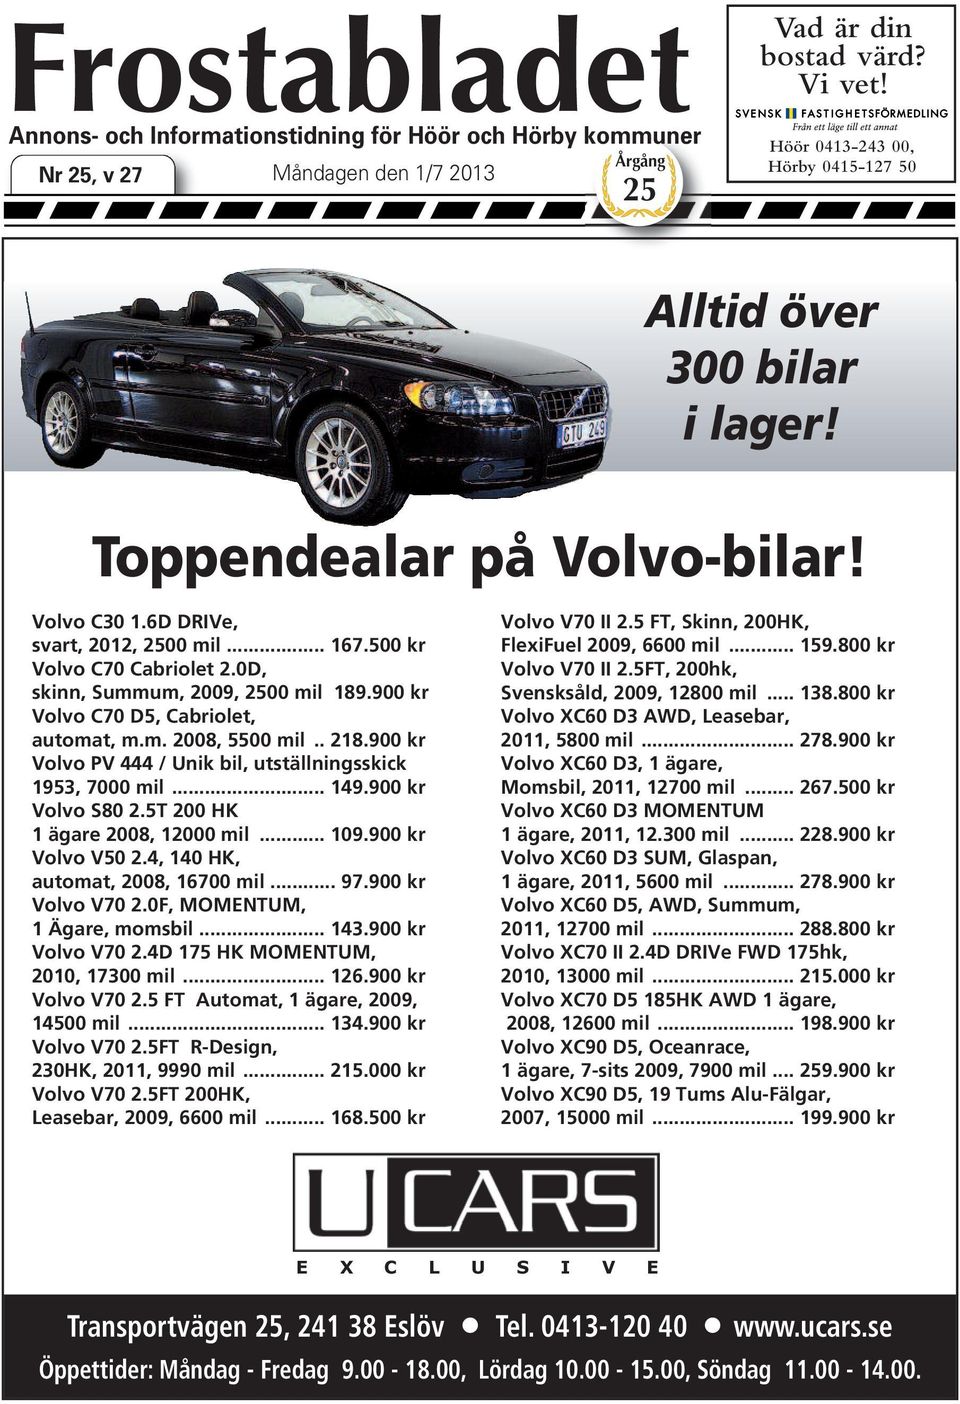 0D, skinn, Summum, 2009, 00 mil 189.900 kr Volvo C70 D5, Cabriolet, automat, m.m. 2008, 5500 mil.. 218.900 kr Volvo PV 444 / Unik bil, utställningsskick 1953, 7000 mil... 149.900 kr Volvo S80 2.